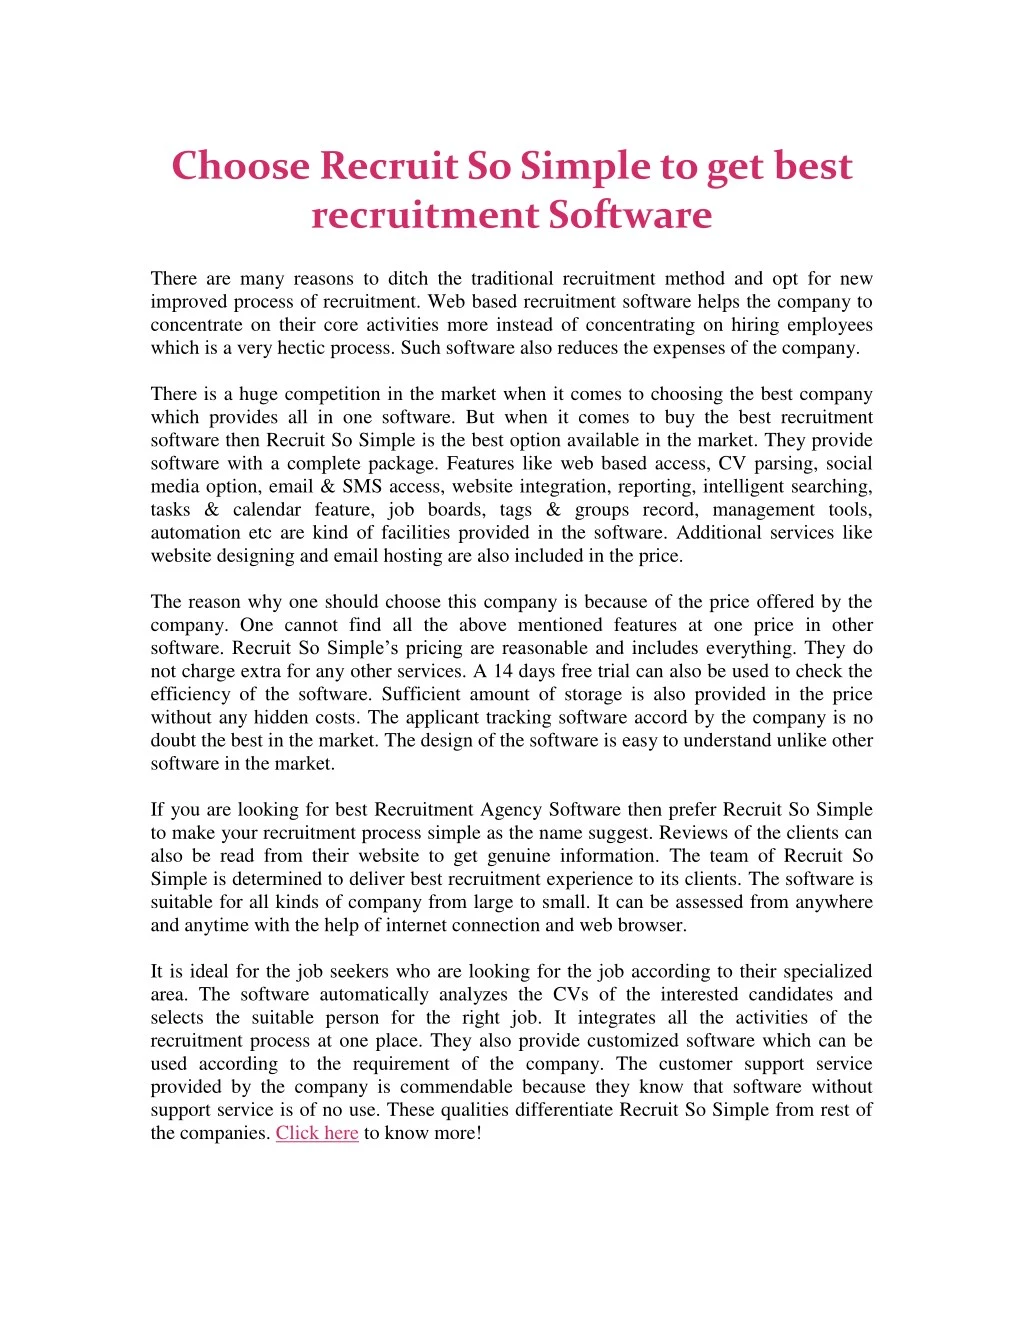 choose recruit so simple to get best recruitment